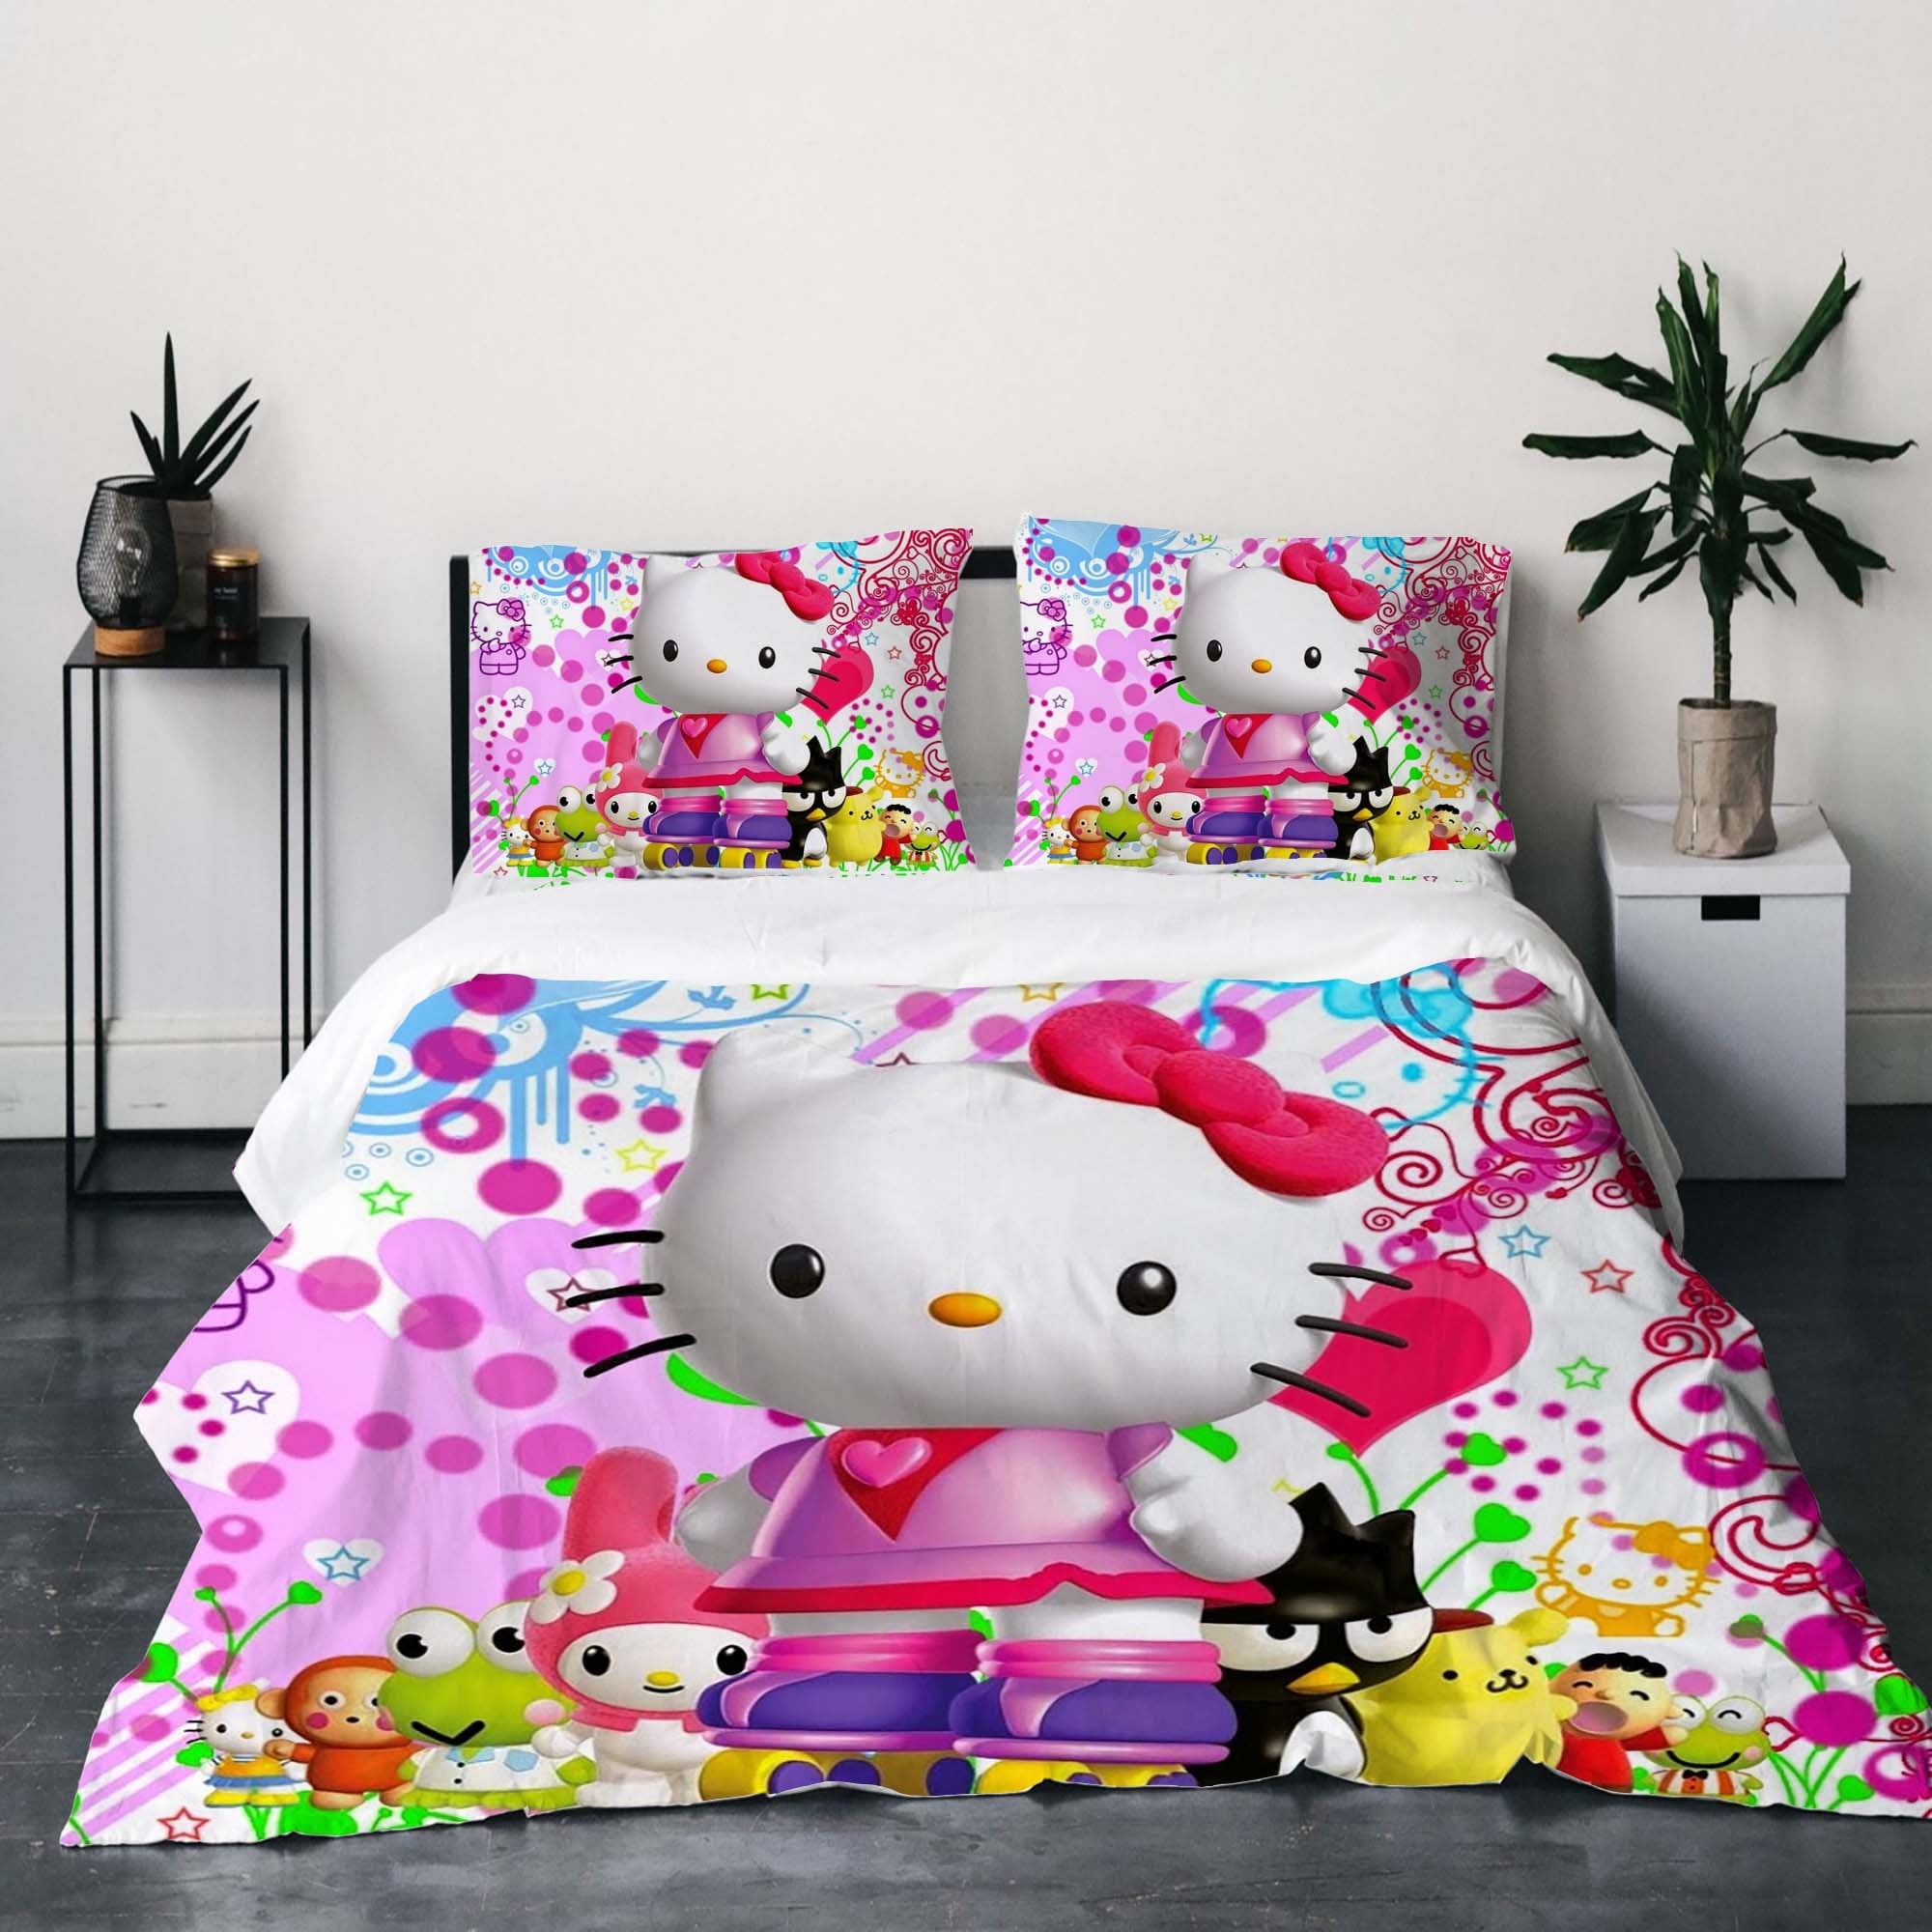 Christmas Hello Kitty Bedding Bedroom, Bedding Set.